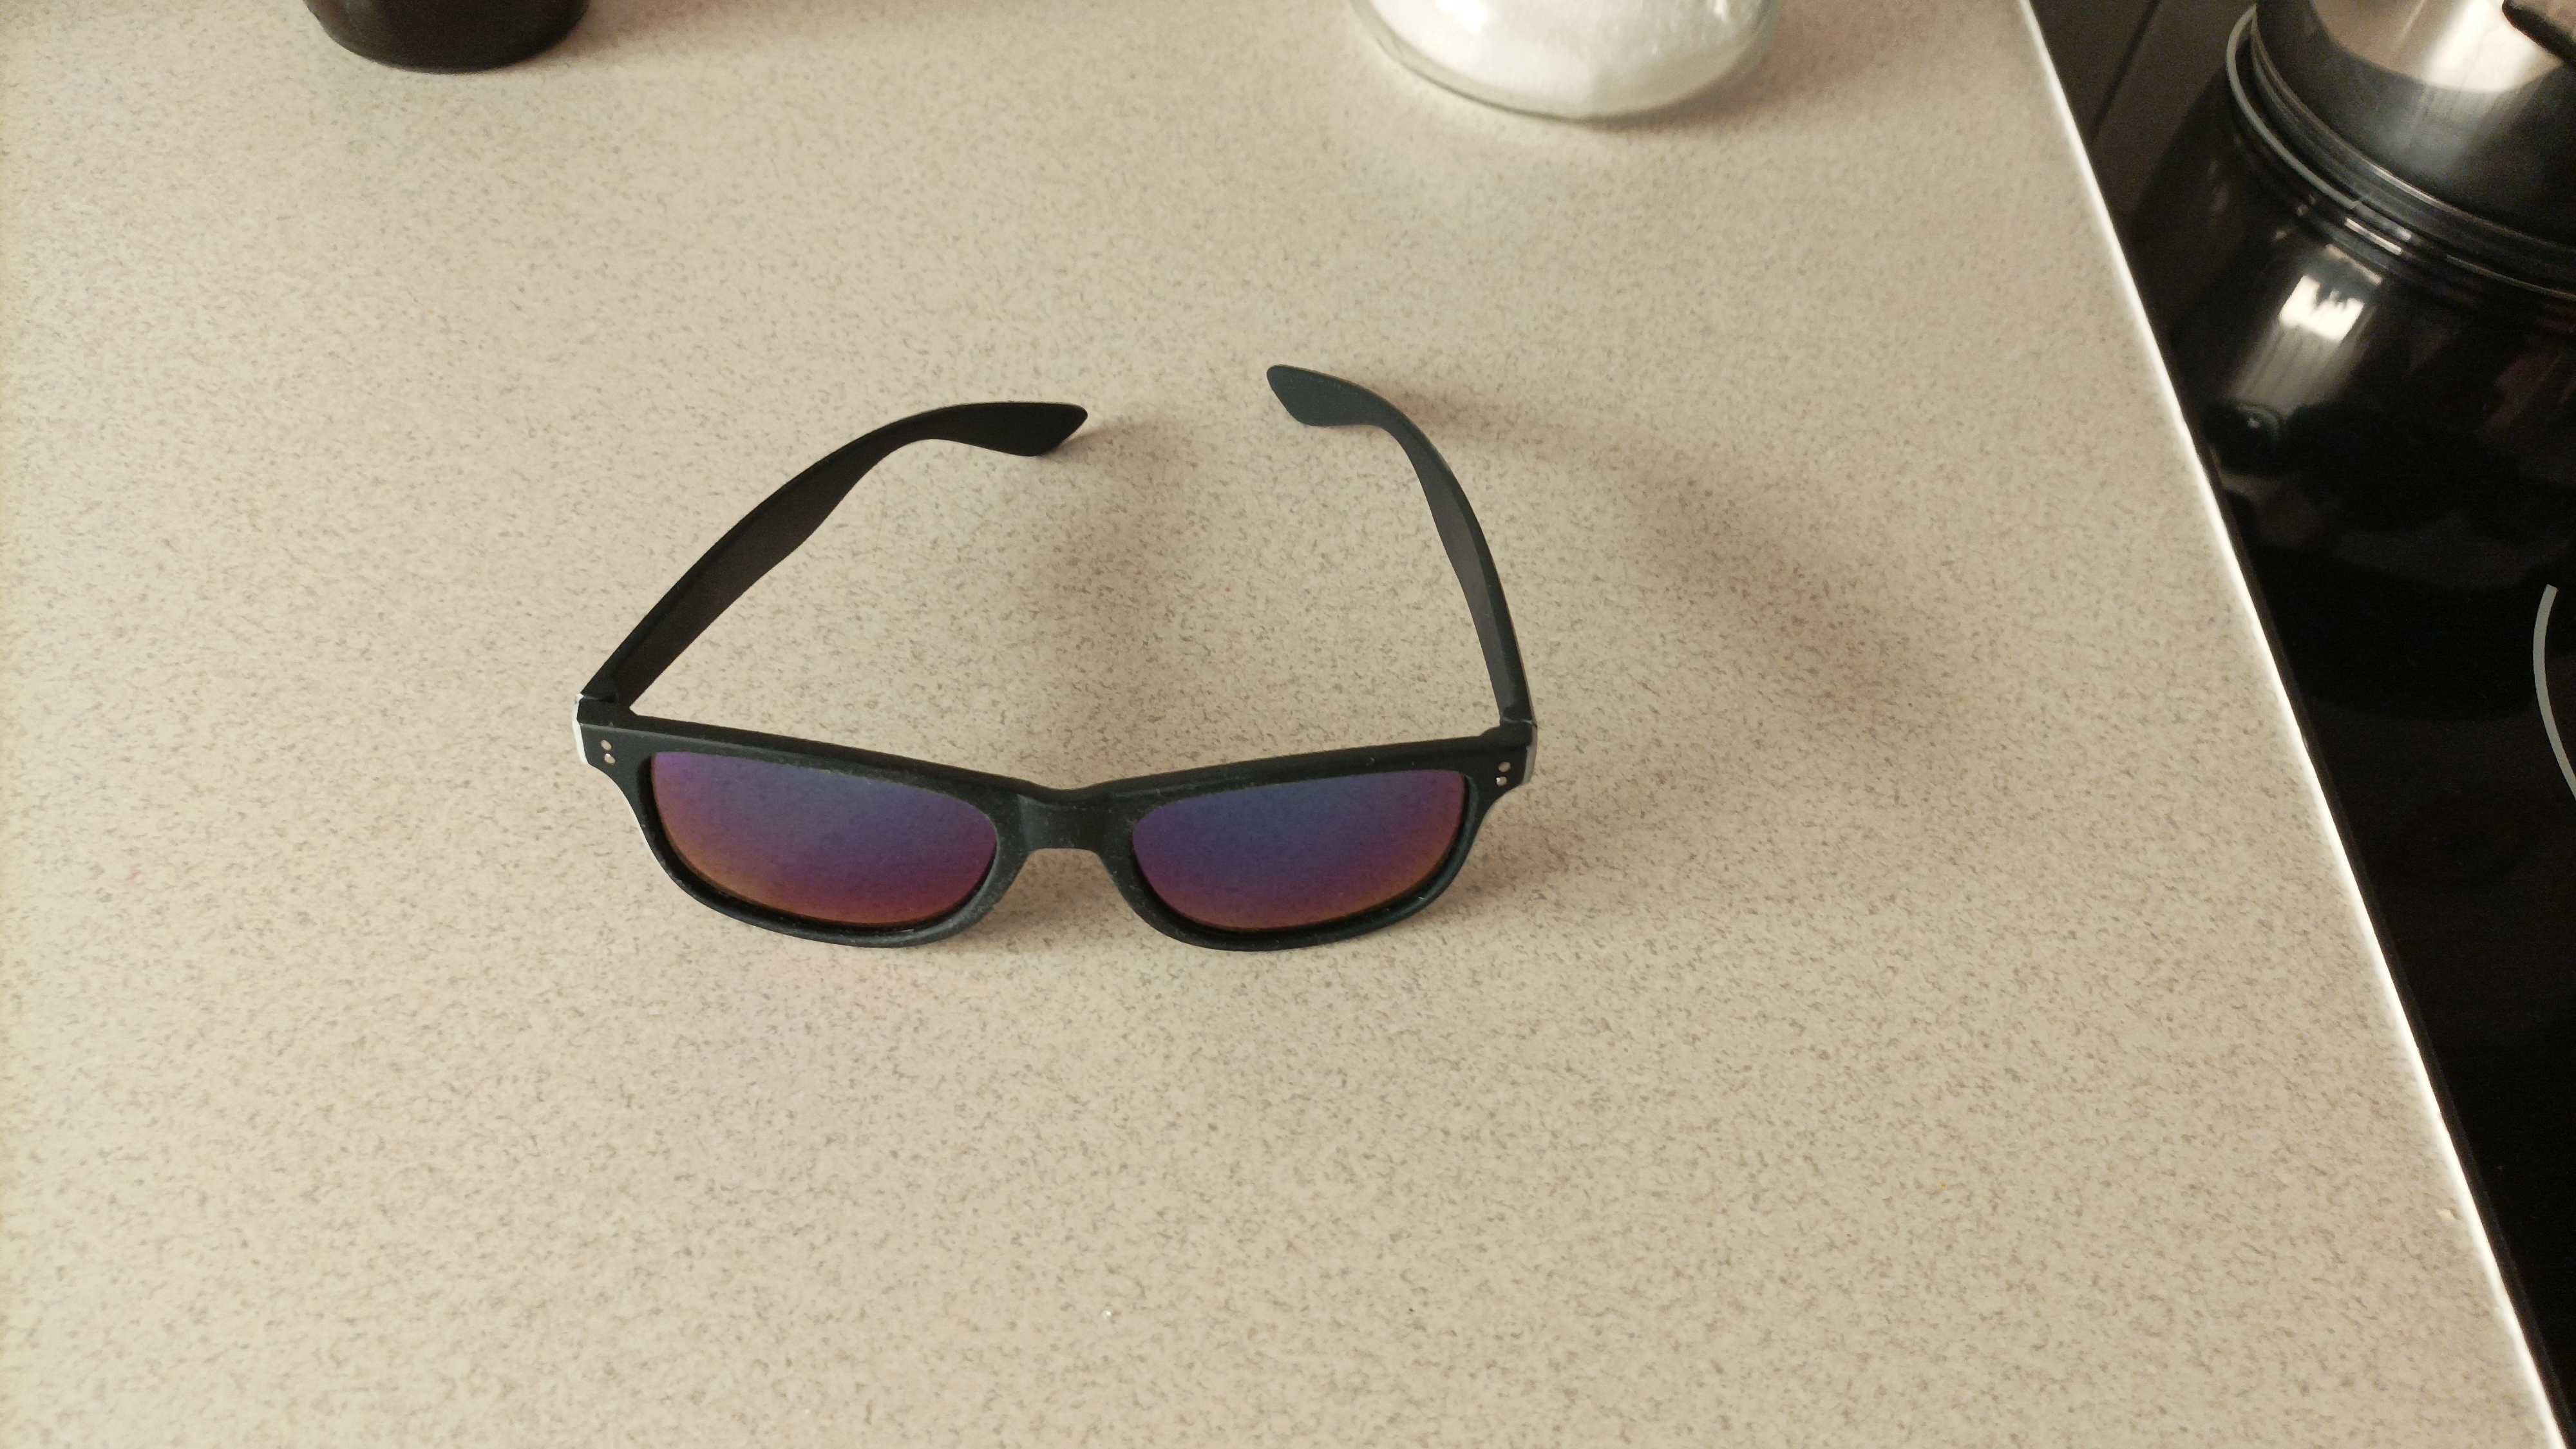 Okulary słoneczne z filtrem UV400 i odblaskami